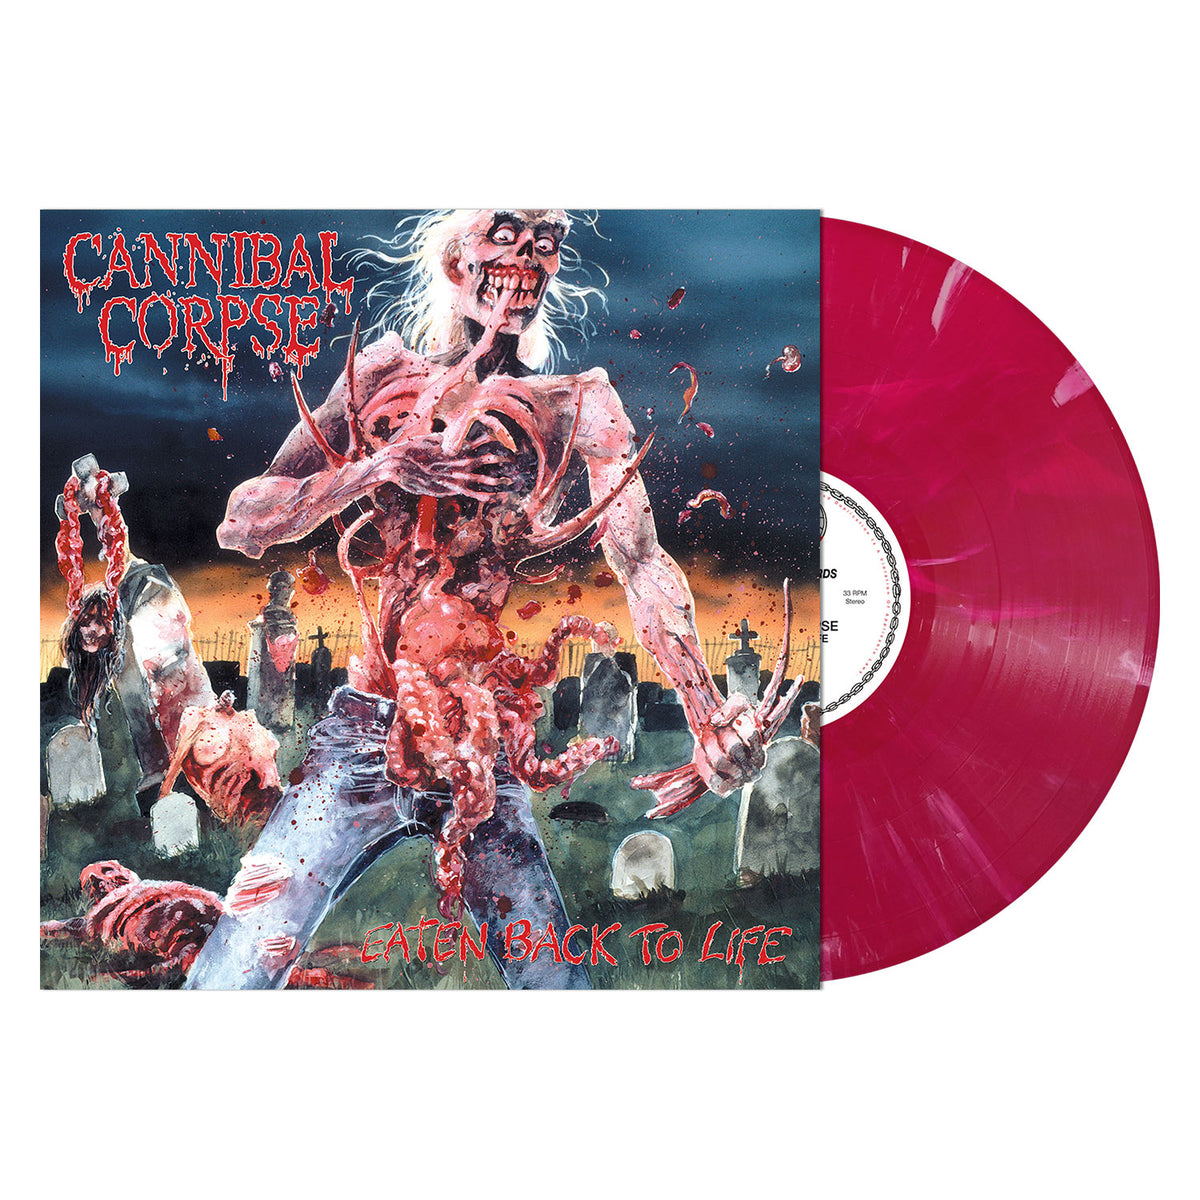 Cannibal Corpse - Eaten Back To Life LP (Red Swirl Vinyl)